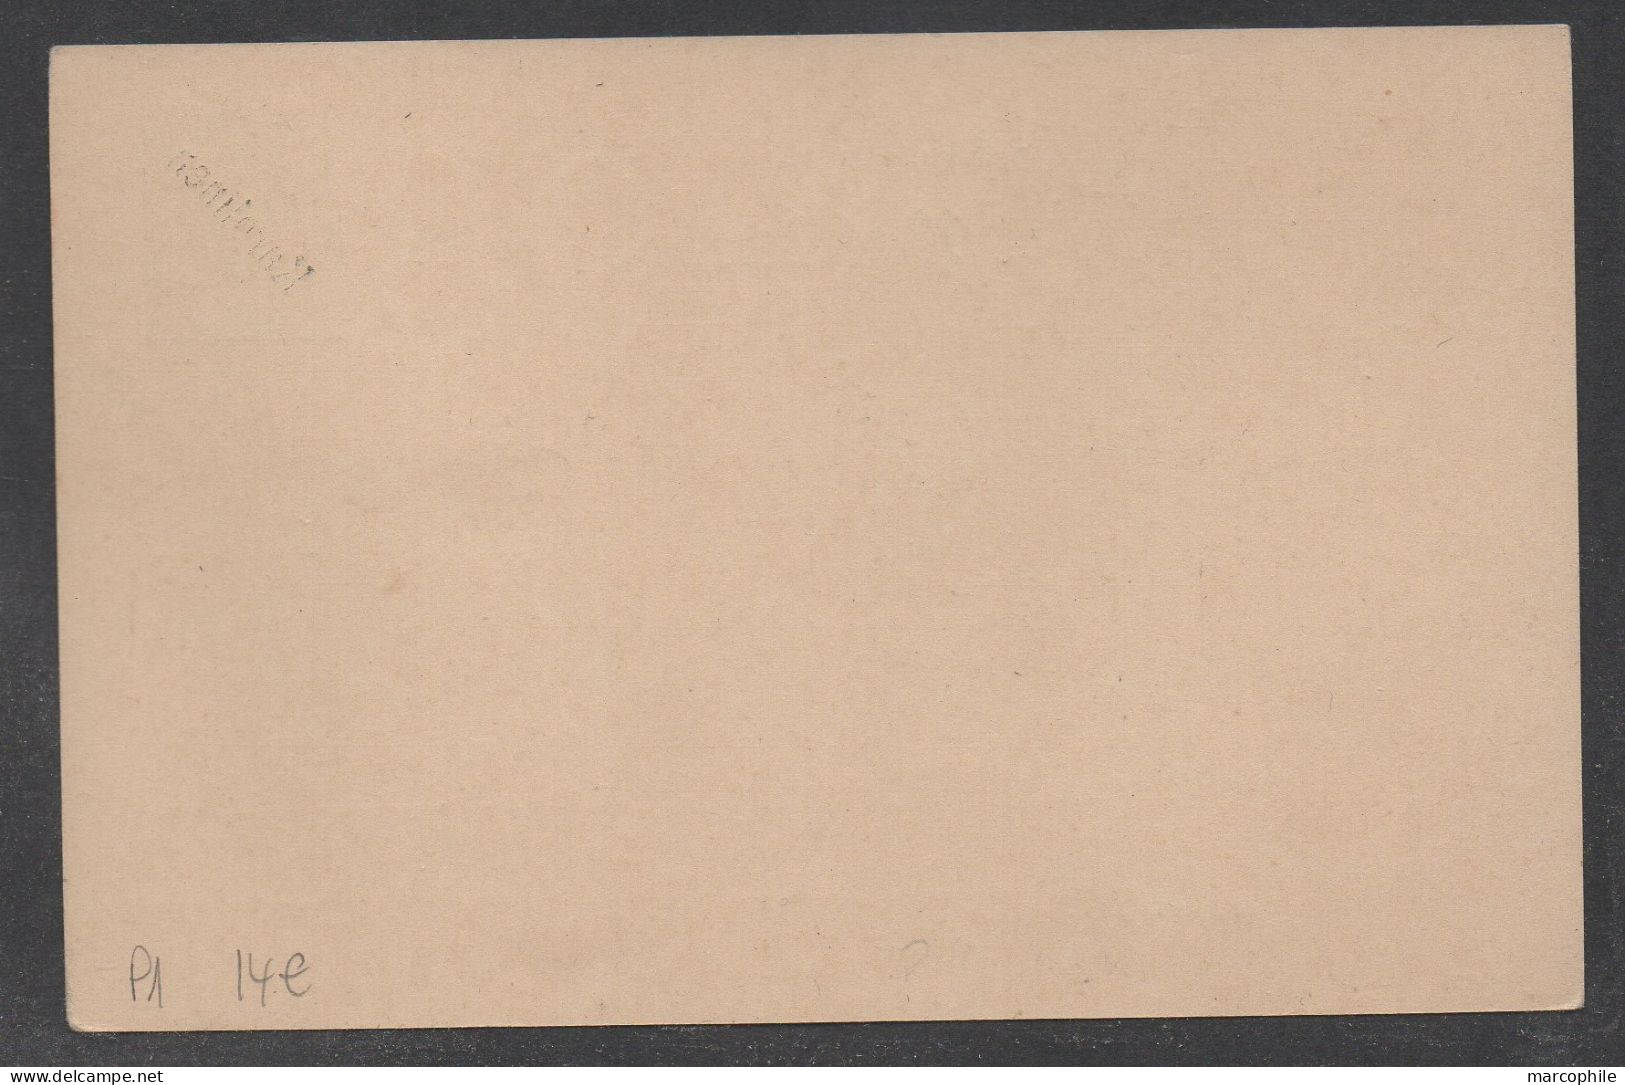 KAROLINEN -  CAROLINES / 1899 # P1 - GSK OHNE DATUM  - ENTIER POSTAL SANS DATE / KW 14.00 EURO - Carolines